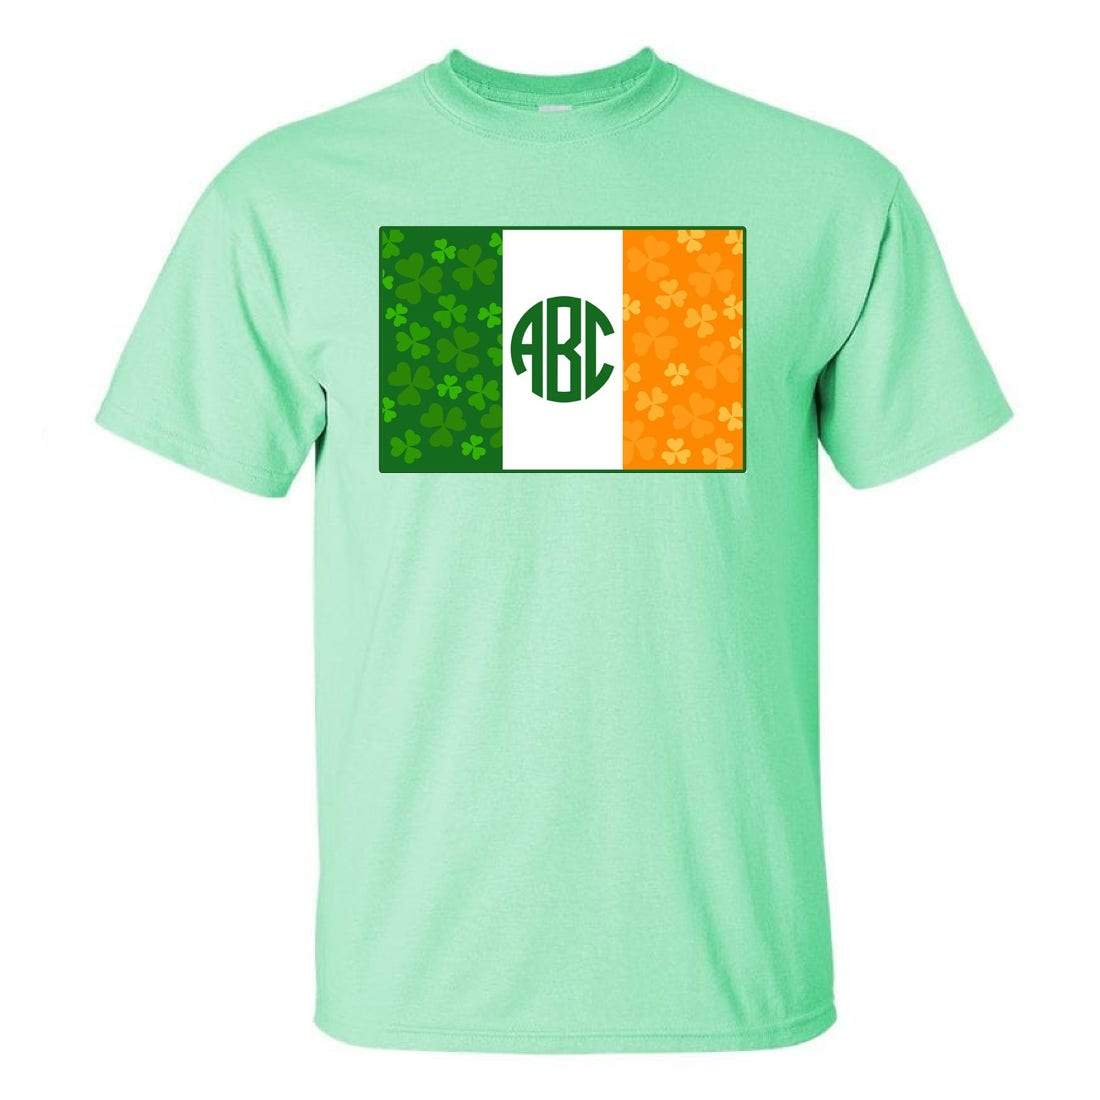 Mint Monogrammed T-Shirt St- Patricks Day